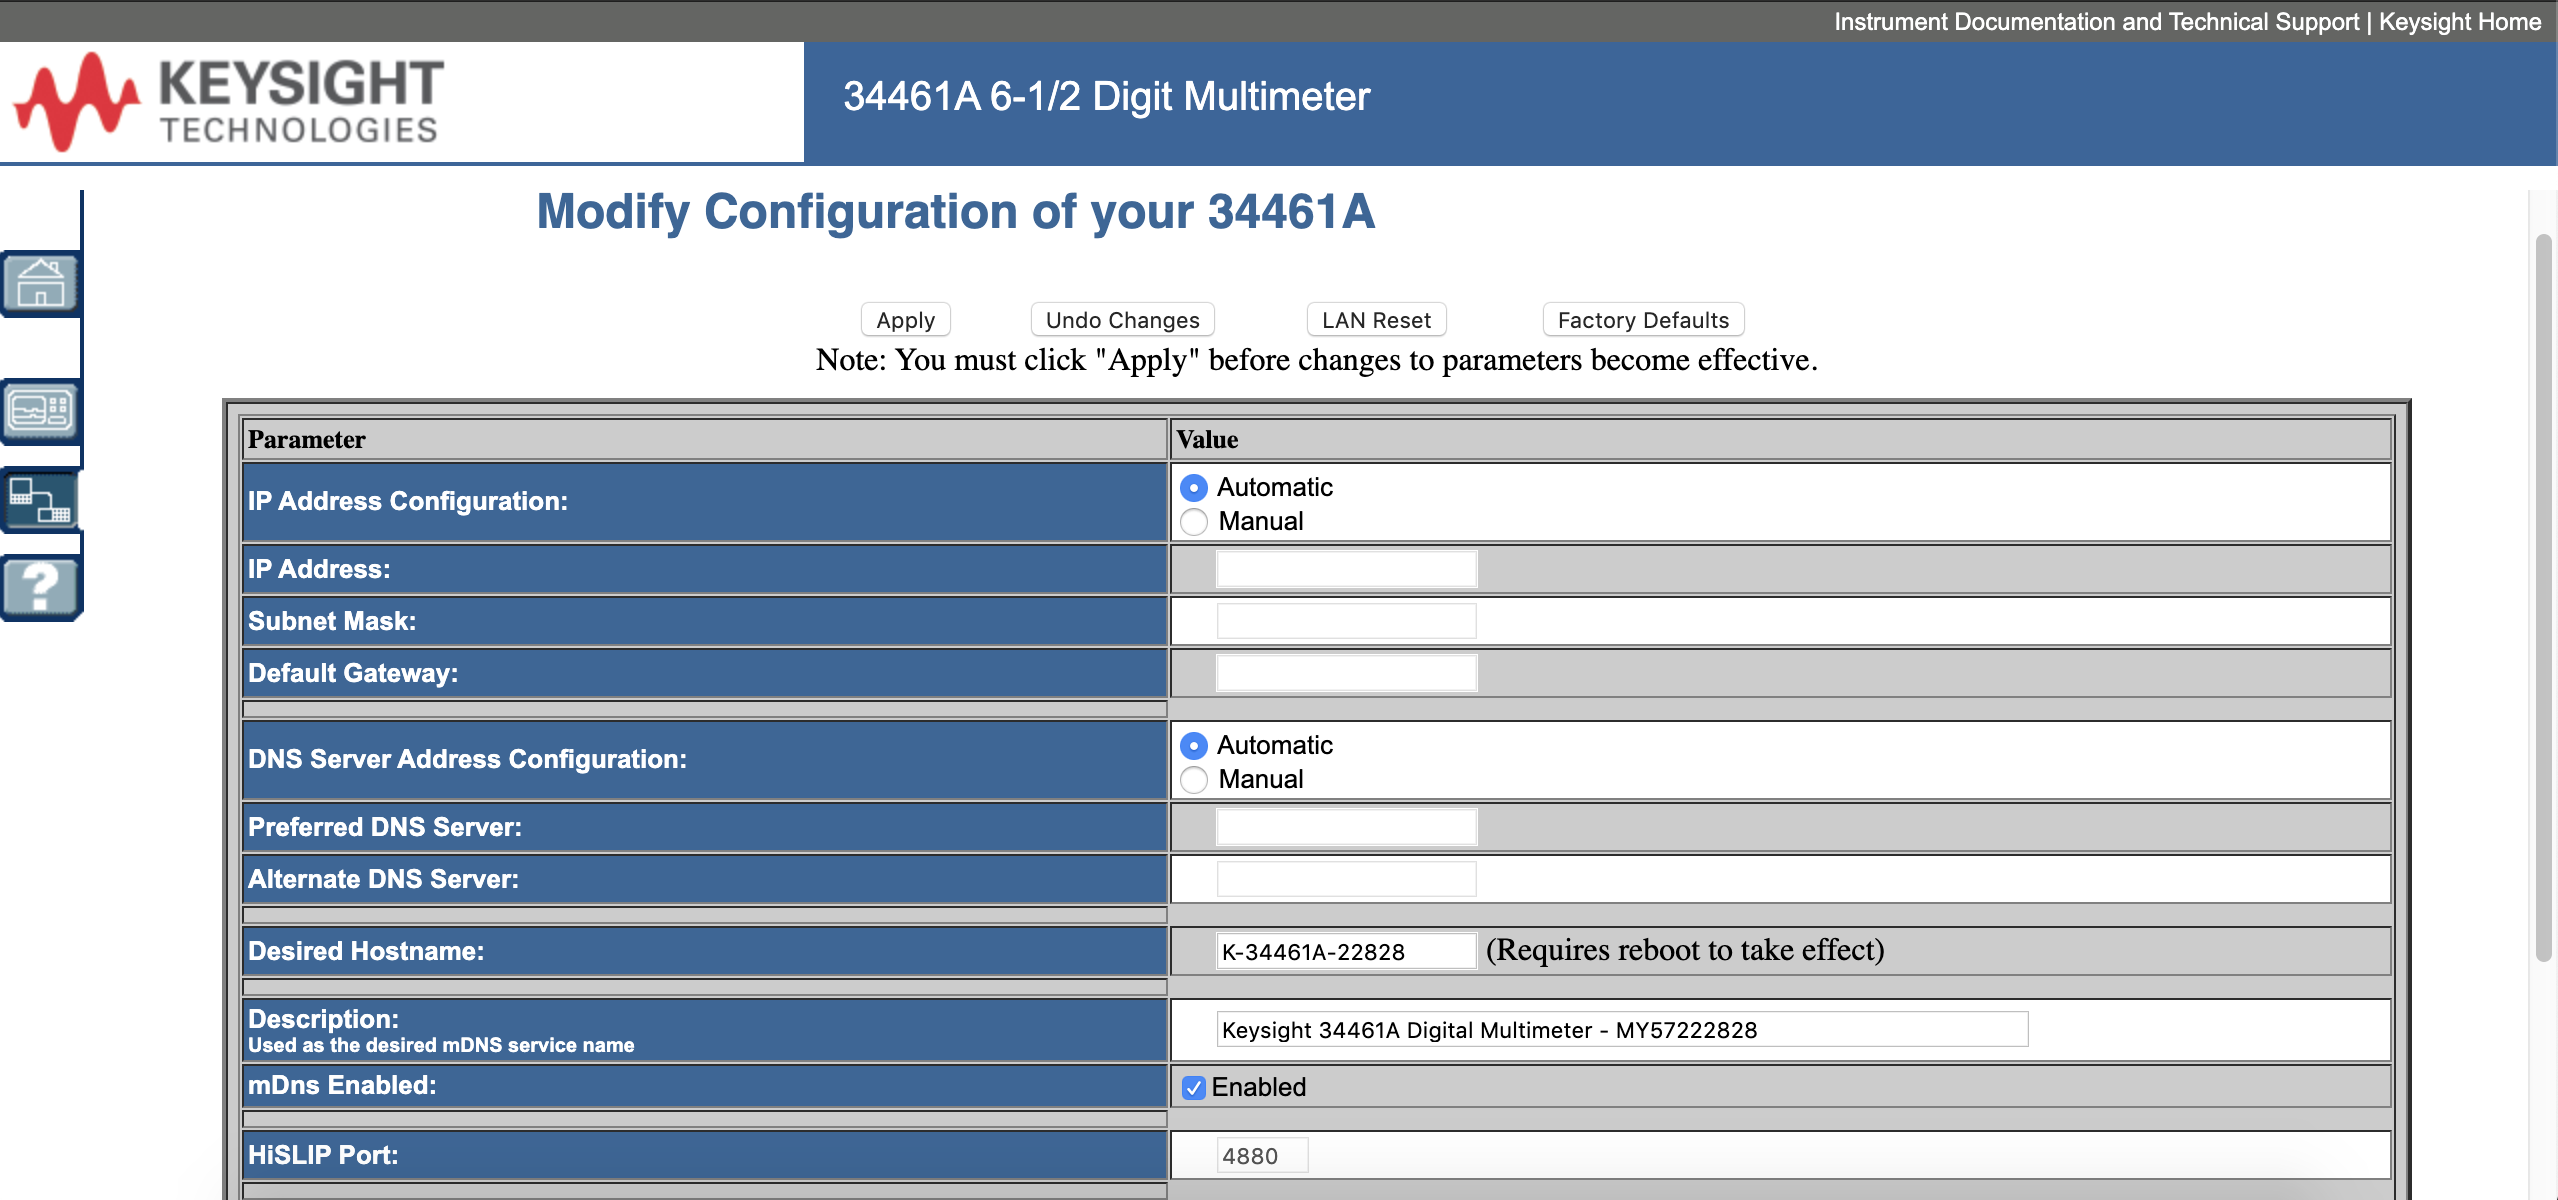 Figure 2. Web interface of Keysight 34461A Digital Multimeter